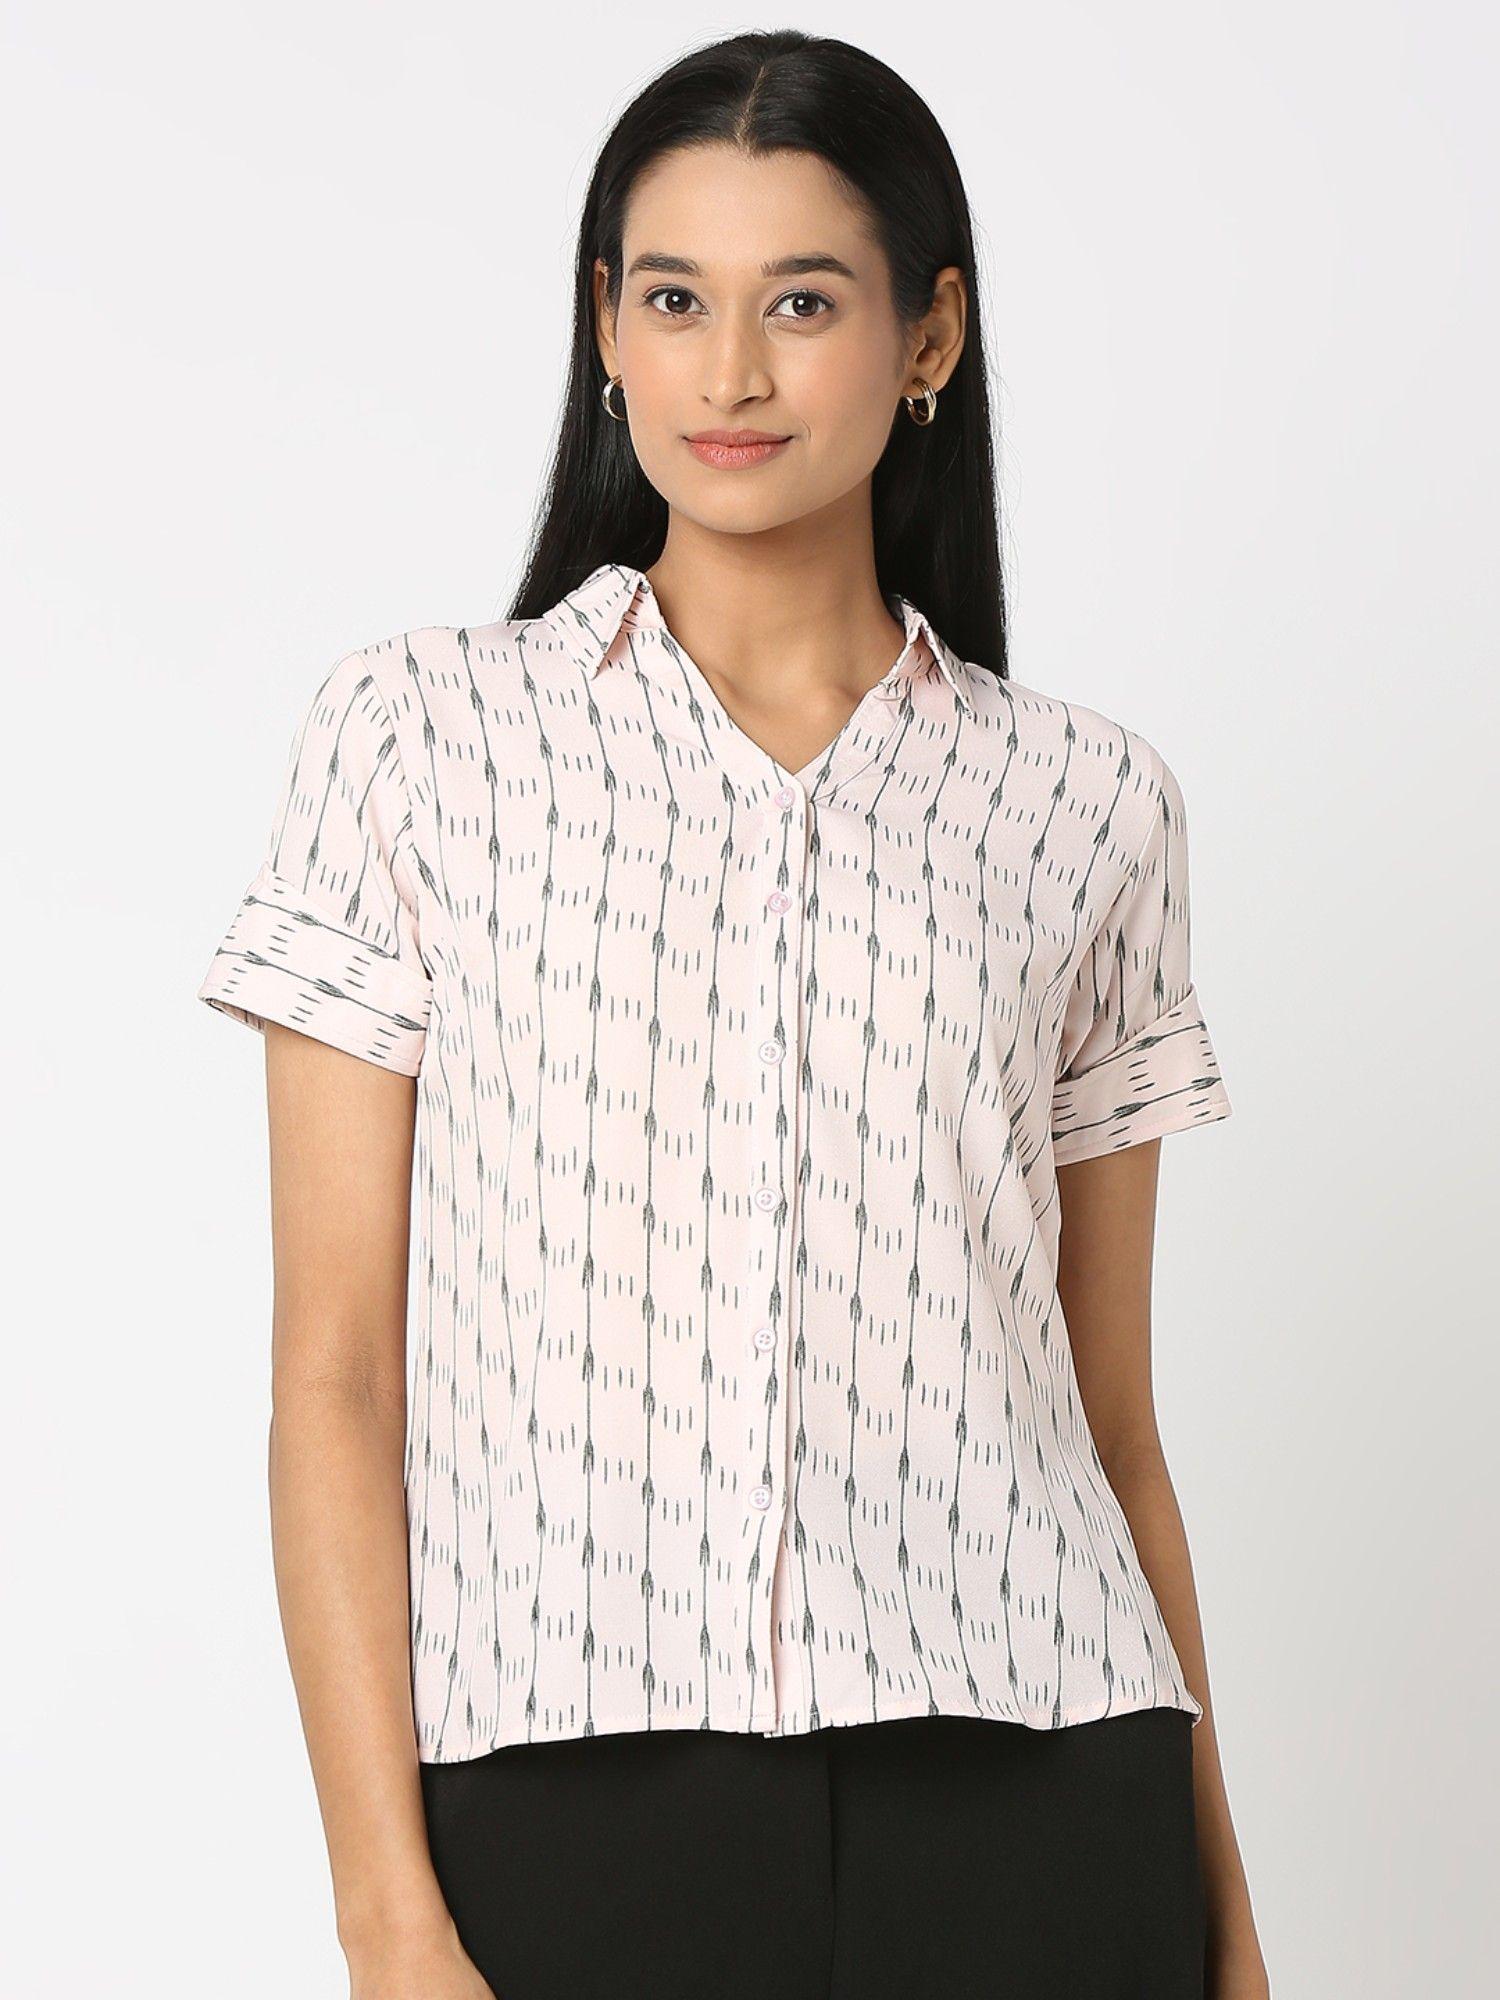 formal peach shirt with grey print